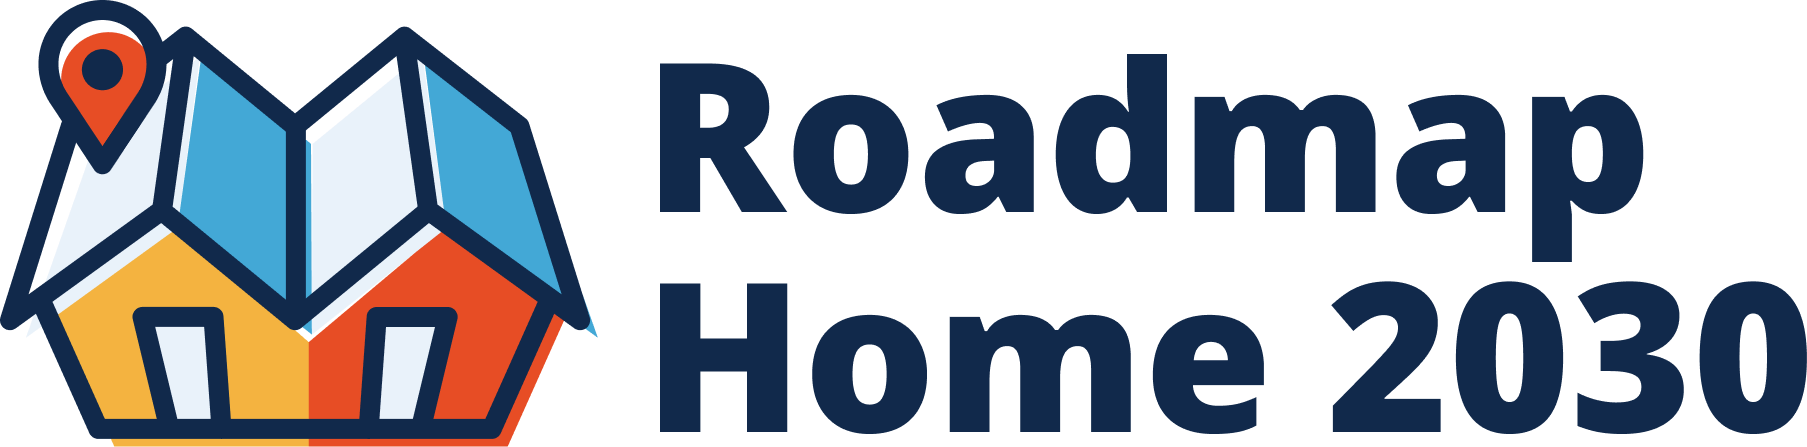 Roadmap Home 2030 new logo